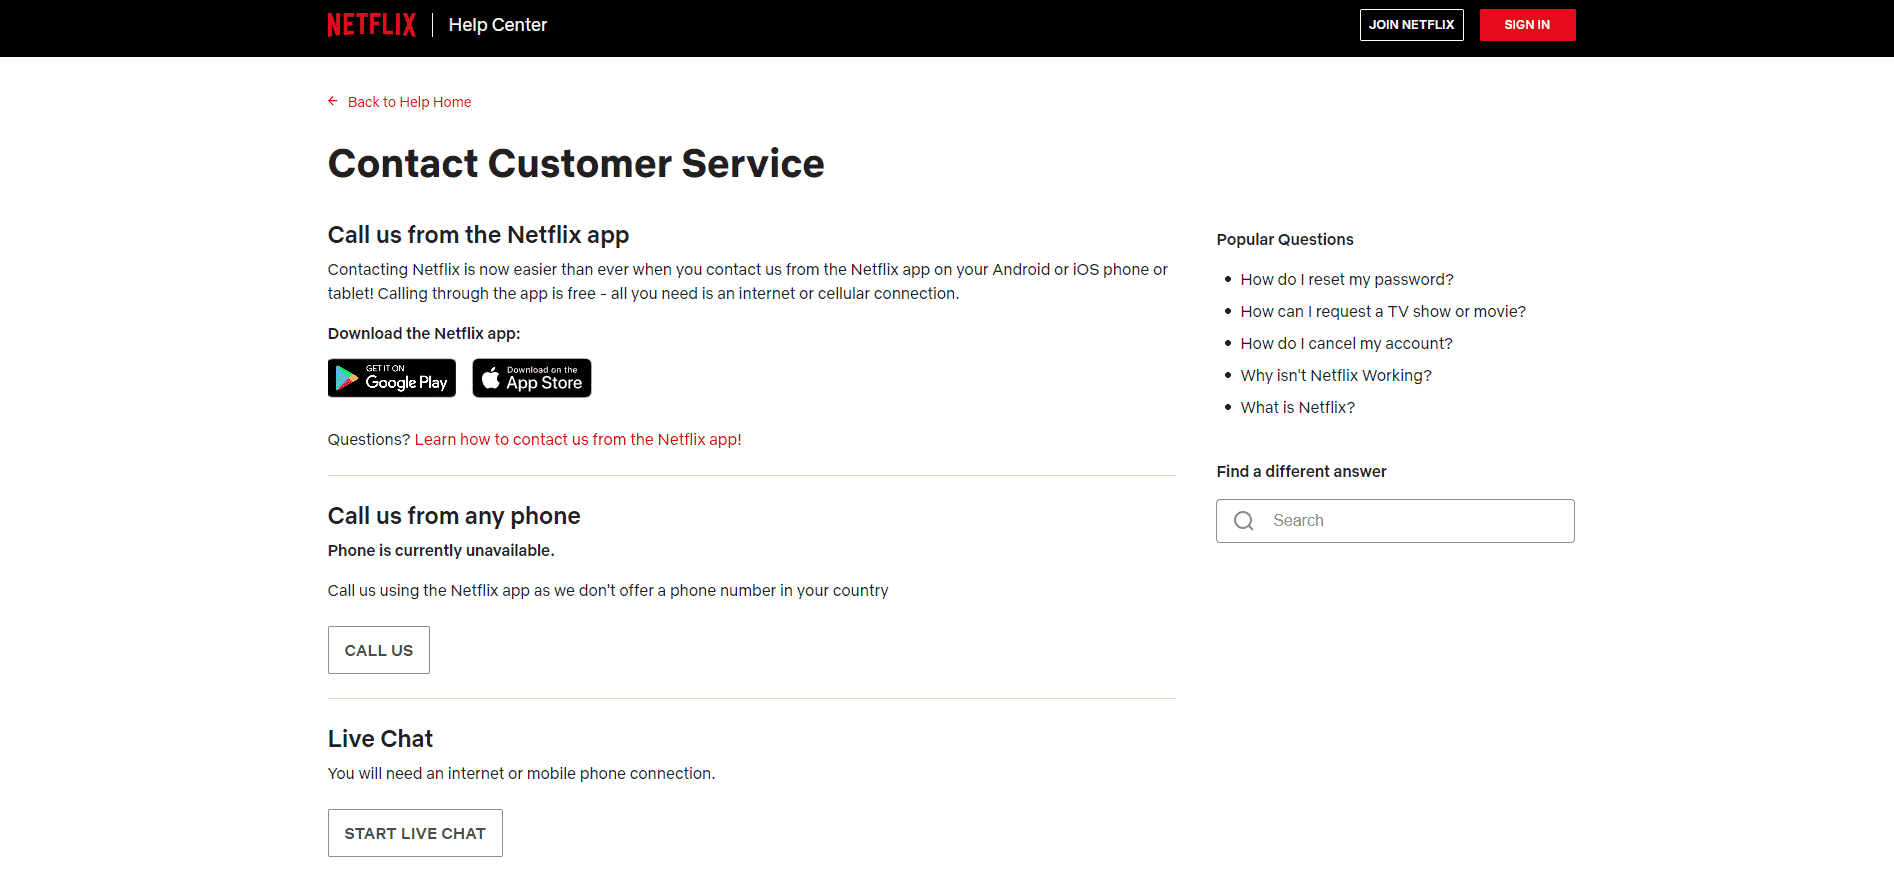 Netflix Contact Customer Service